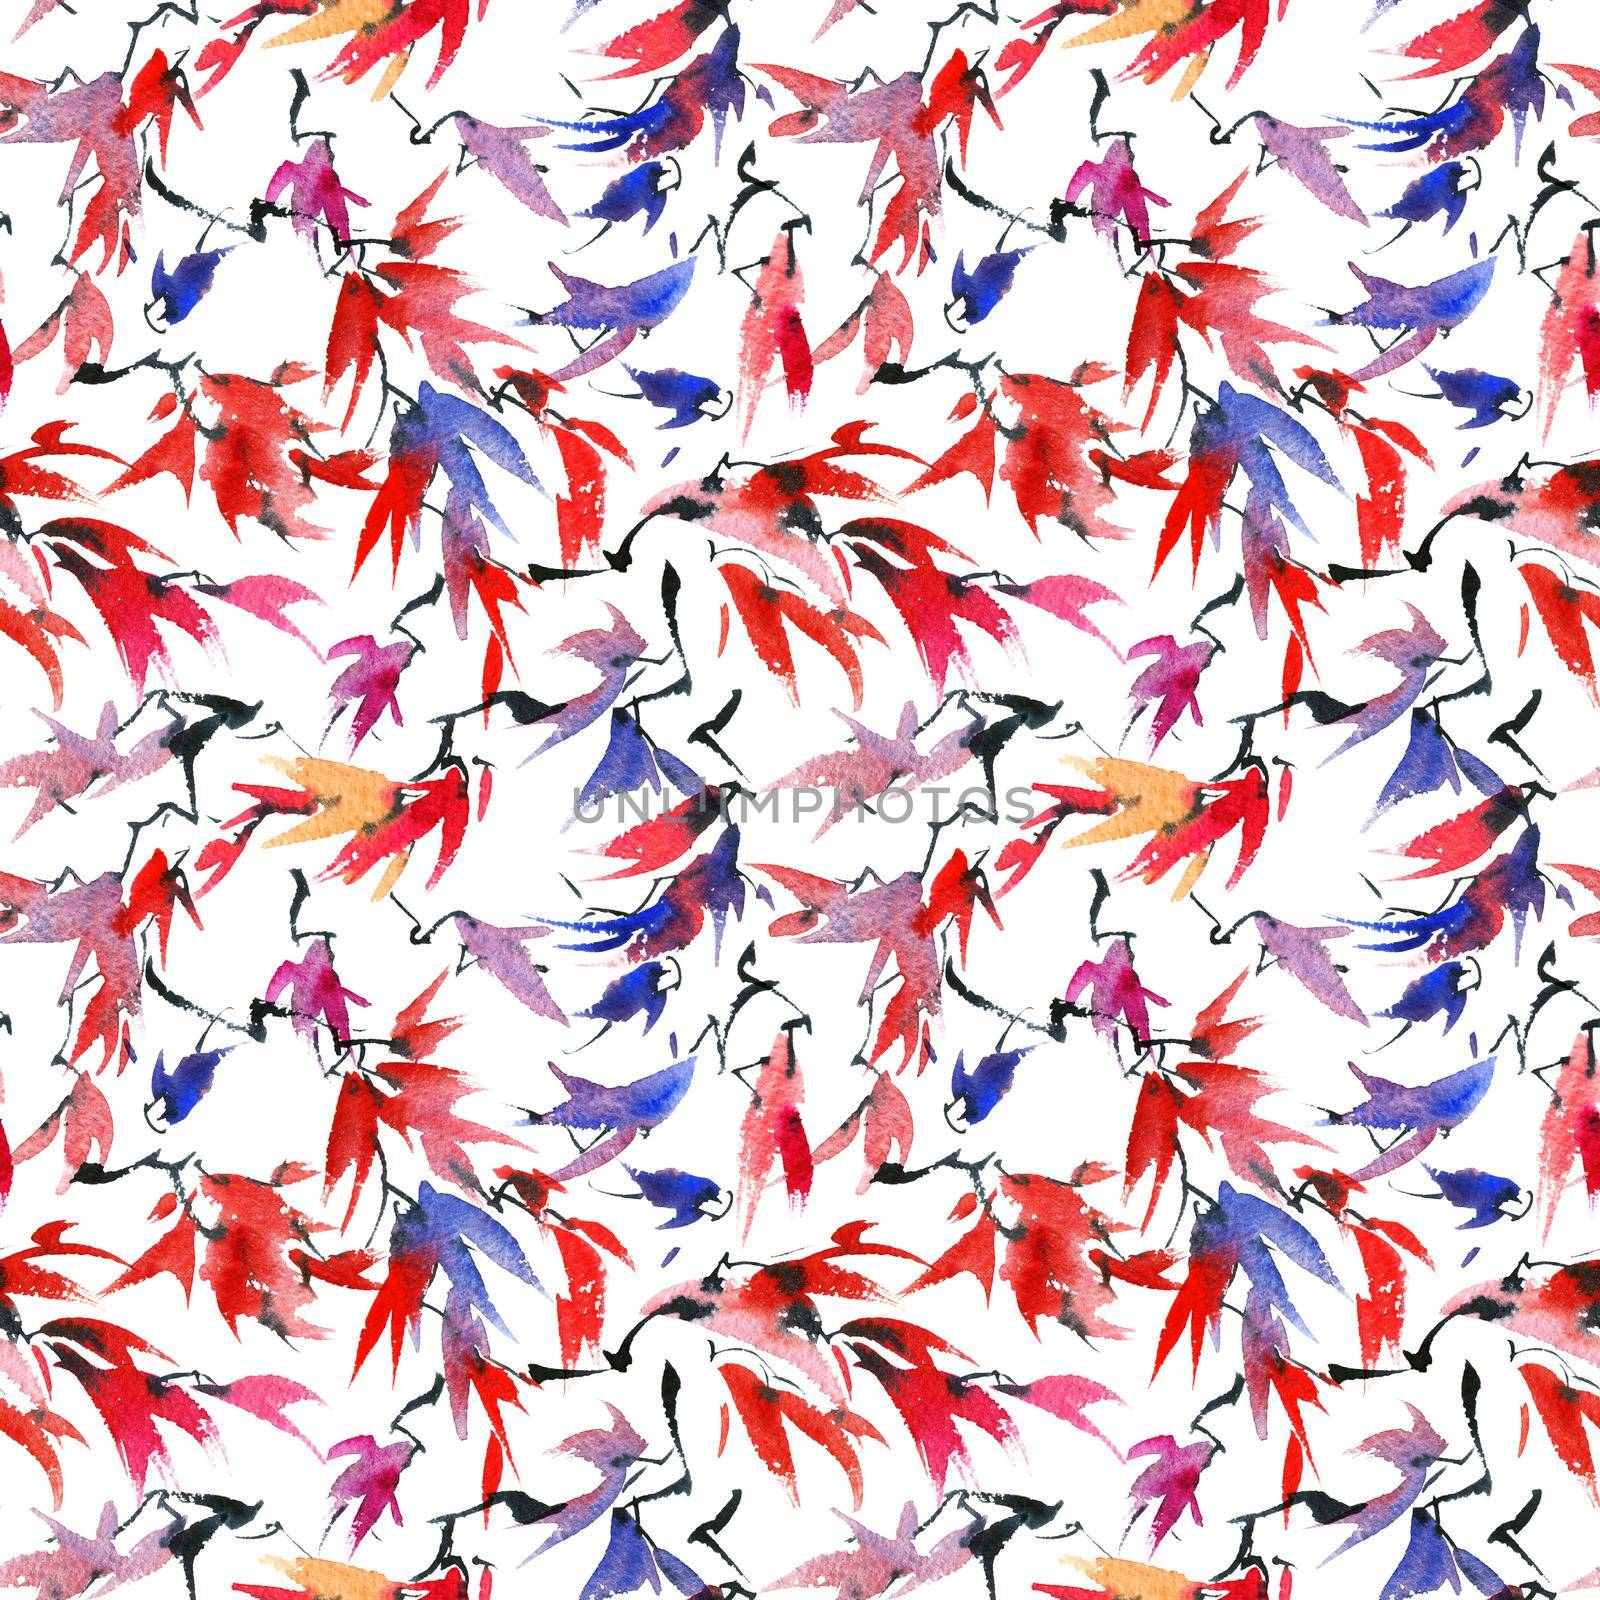 Watercolor foliate pattern by Olatarakanova